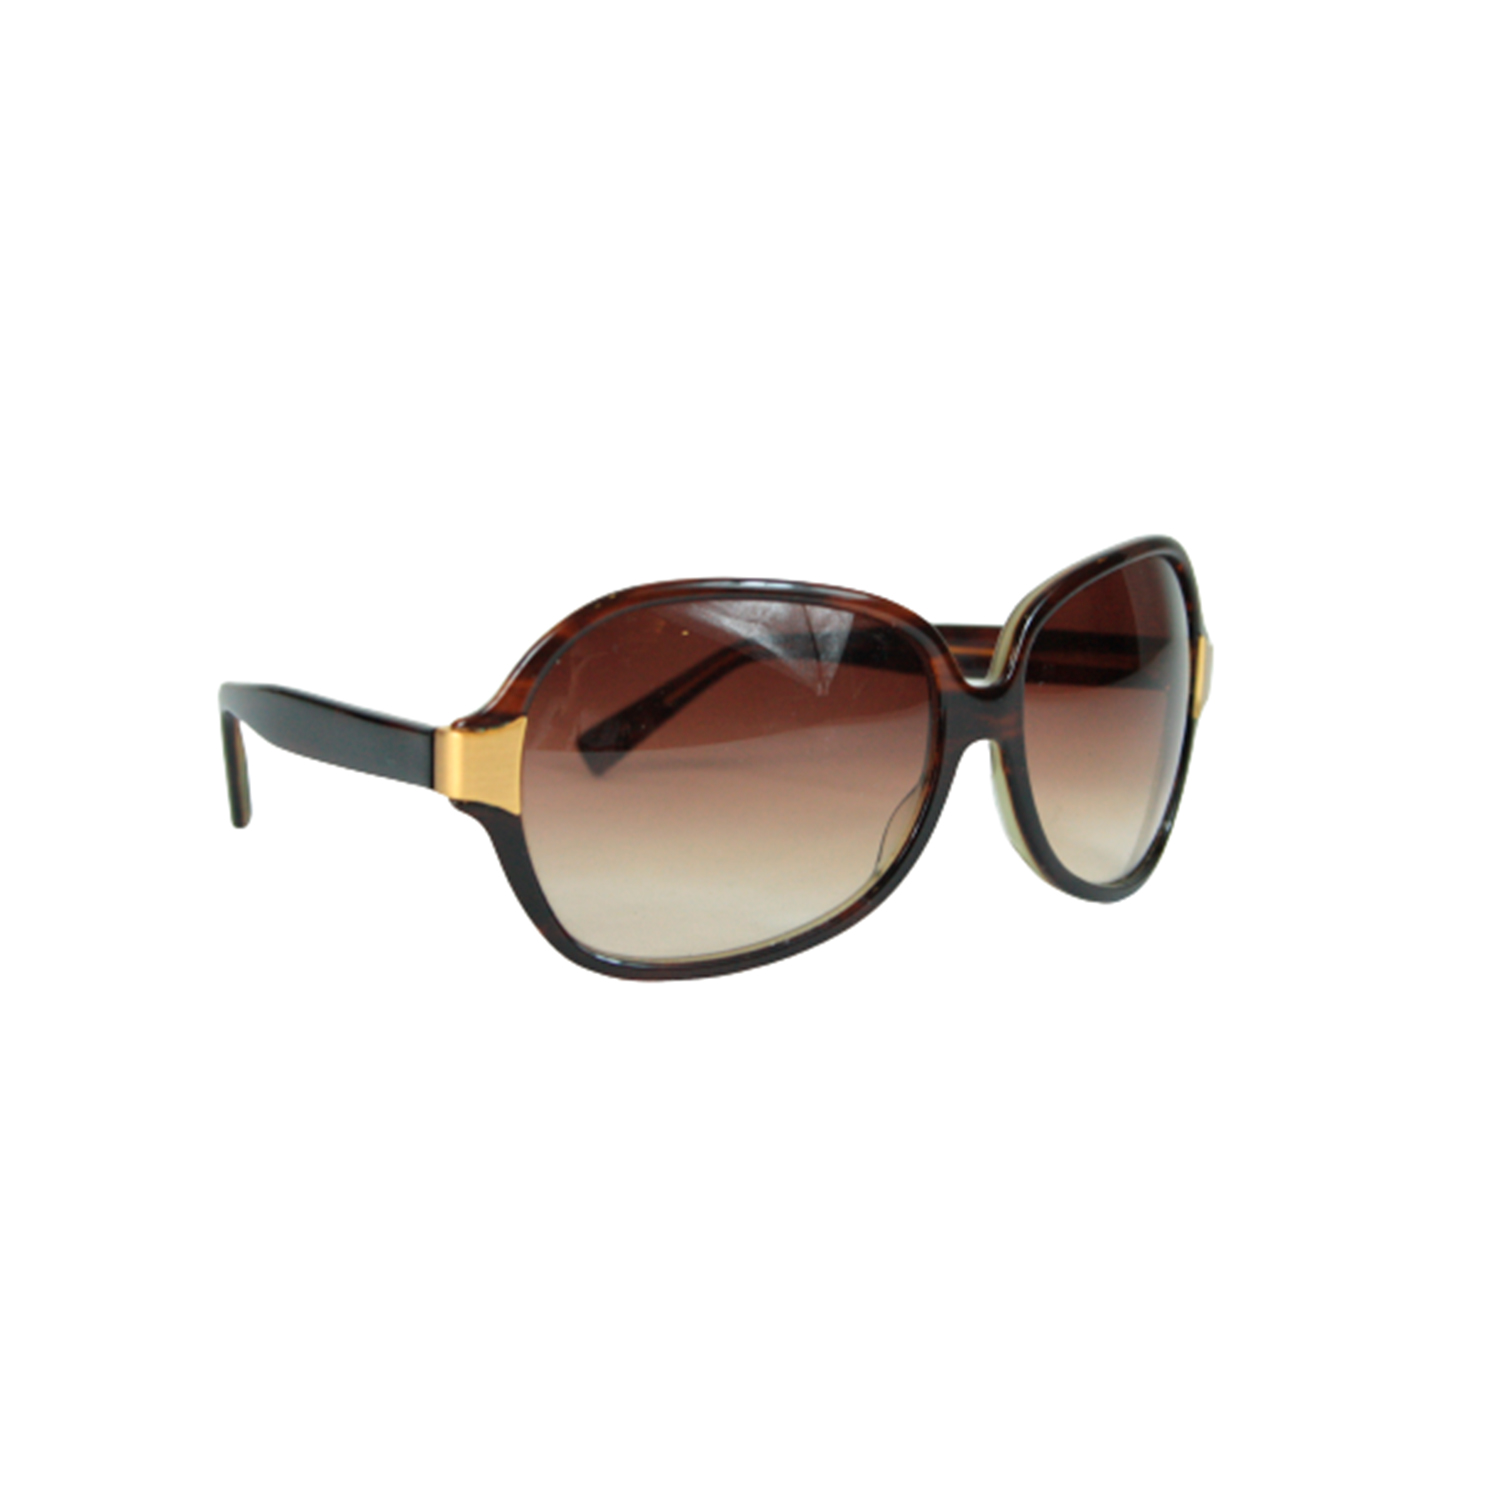 Brown Frame Sunglasses